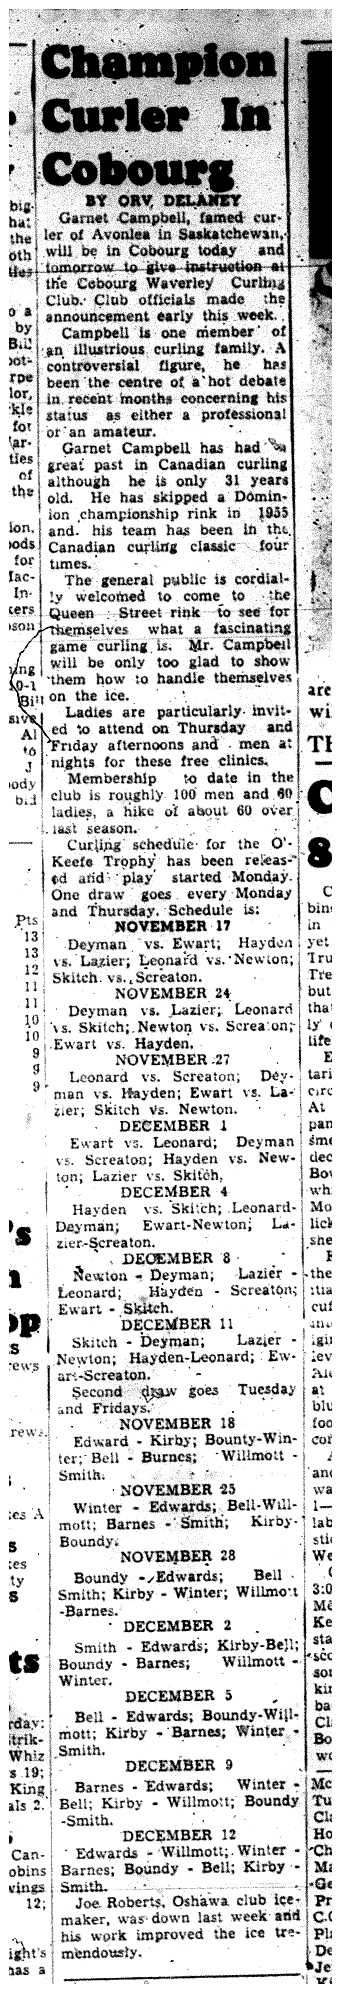 1958-11-28 Curling -Champ curler visits Cobourg Waverly Curling Club